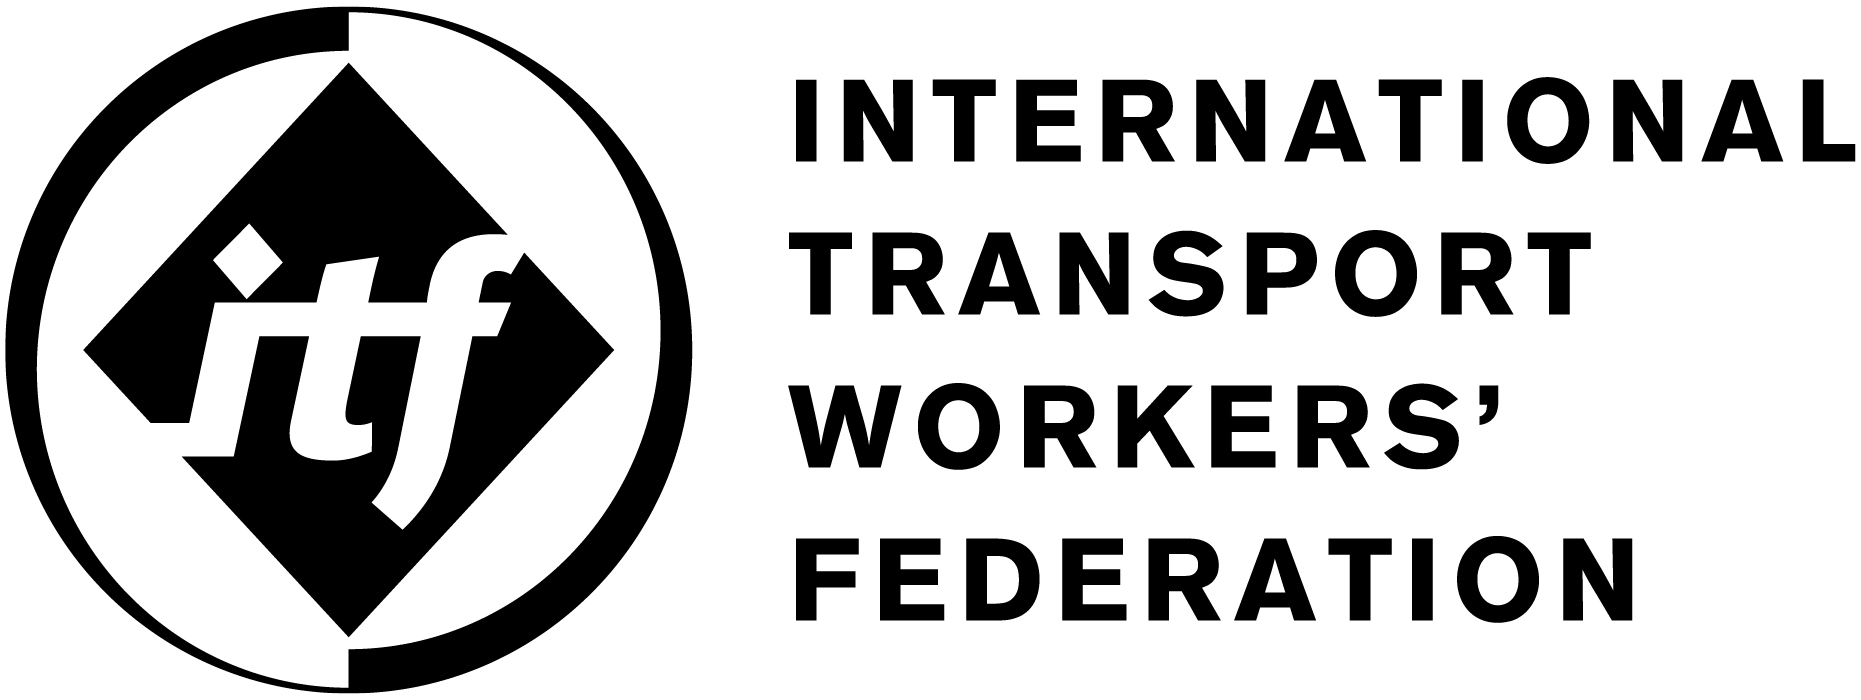 International Transport Workers' Federation (ITF)